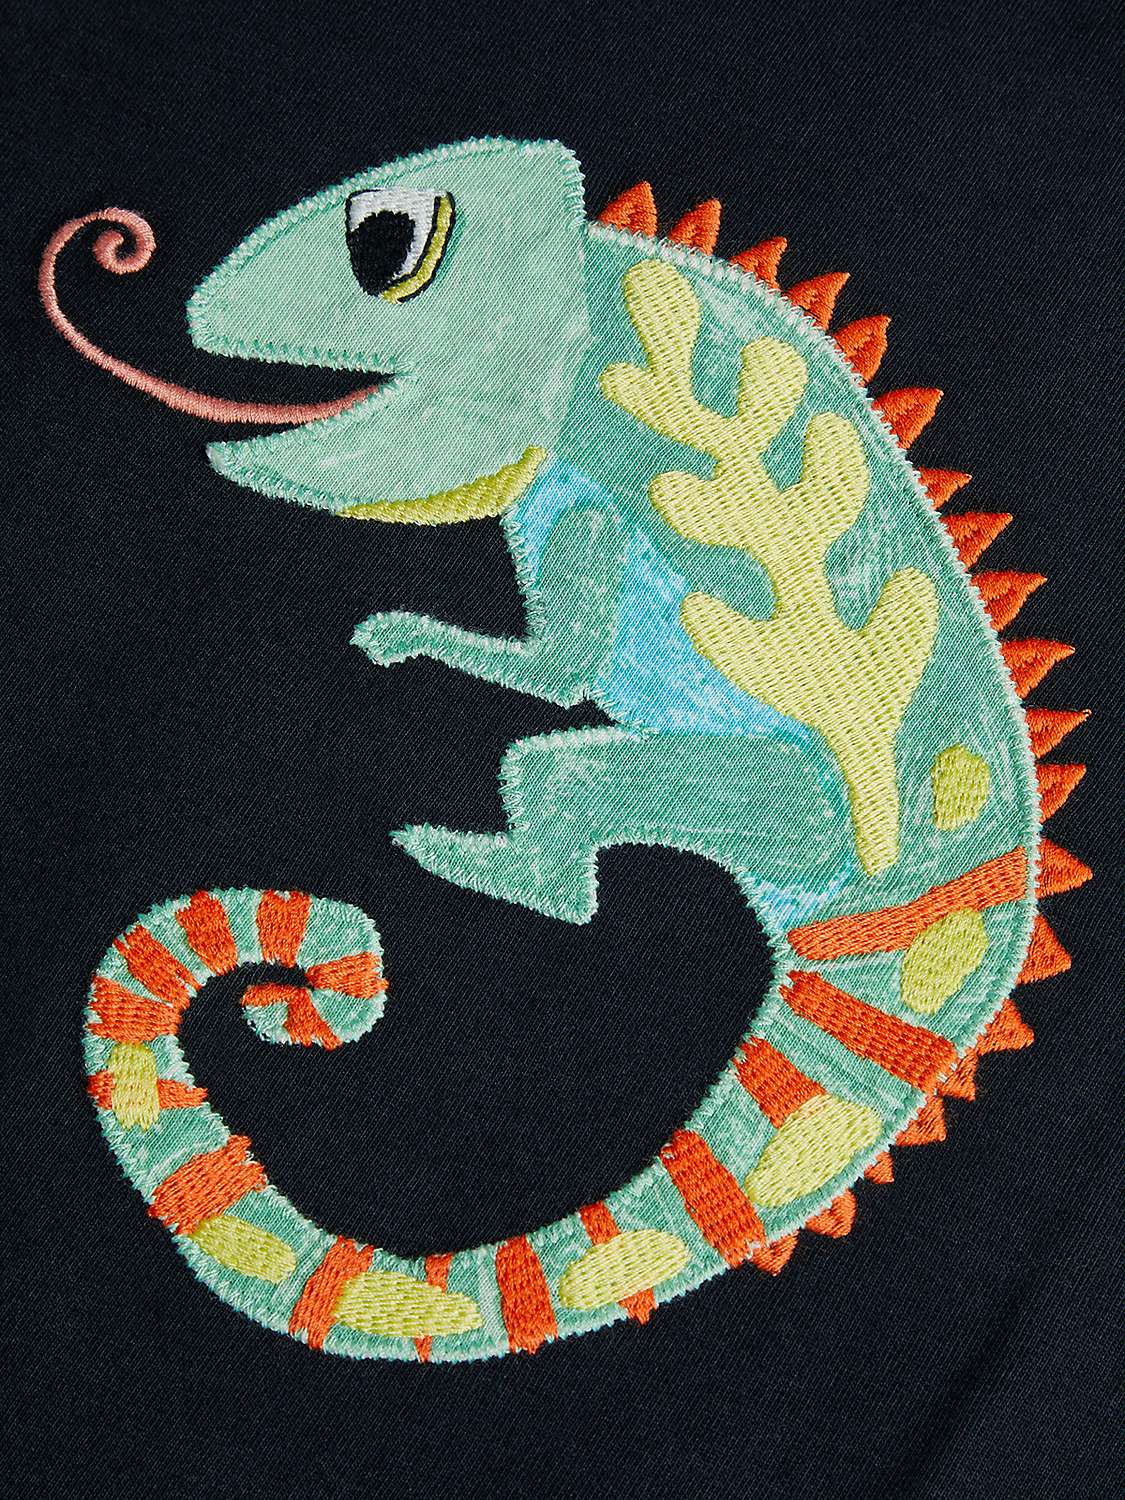 Buy Monsoon Kids' Gecko Embroidered T-Shirt, Black Online at johnlewis.com